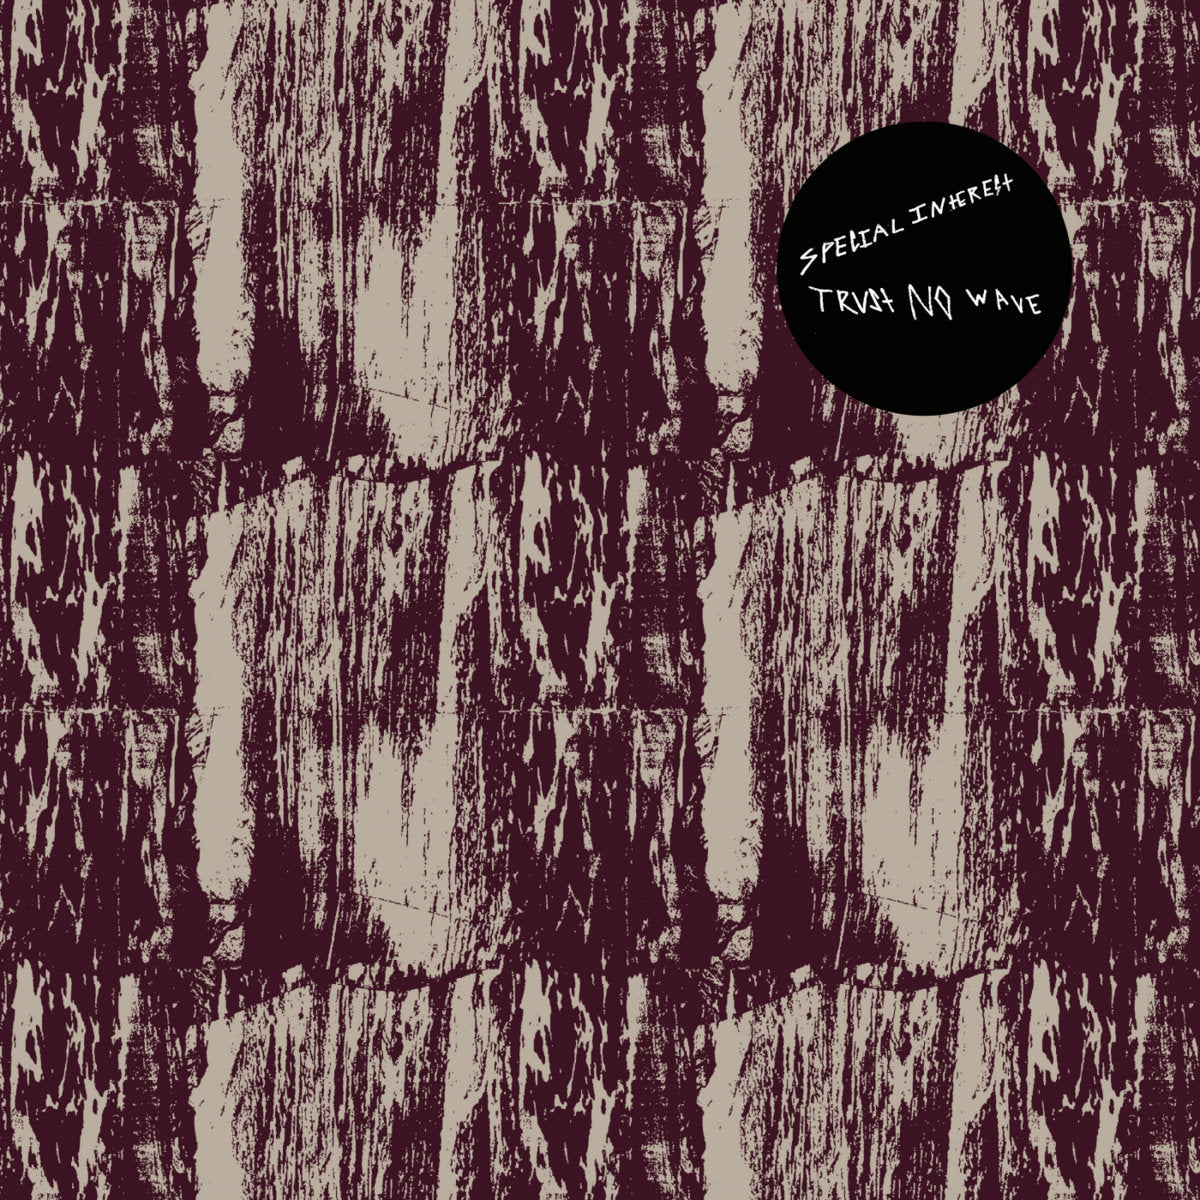 SPECIAL INTEREST - Trust No Wave - LP - Vinyl